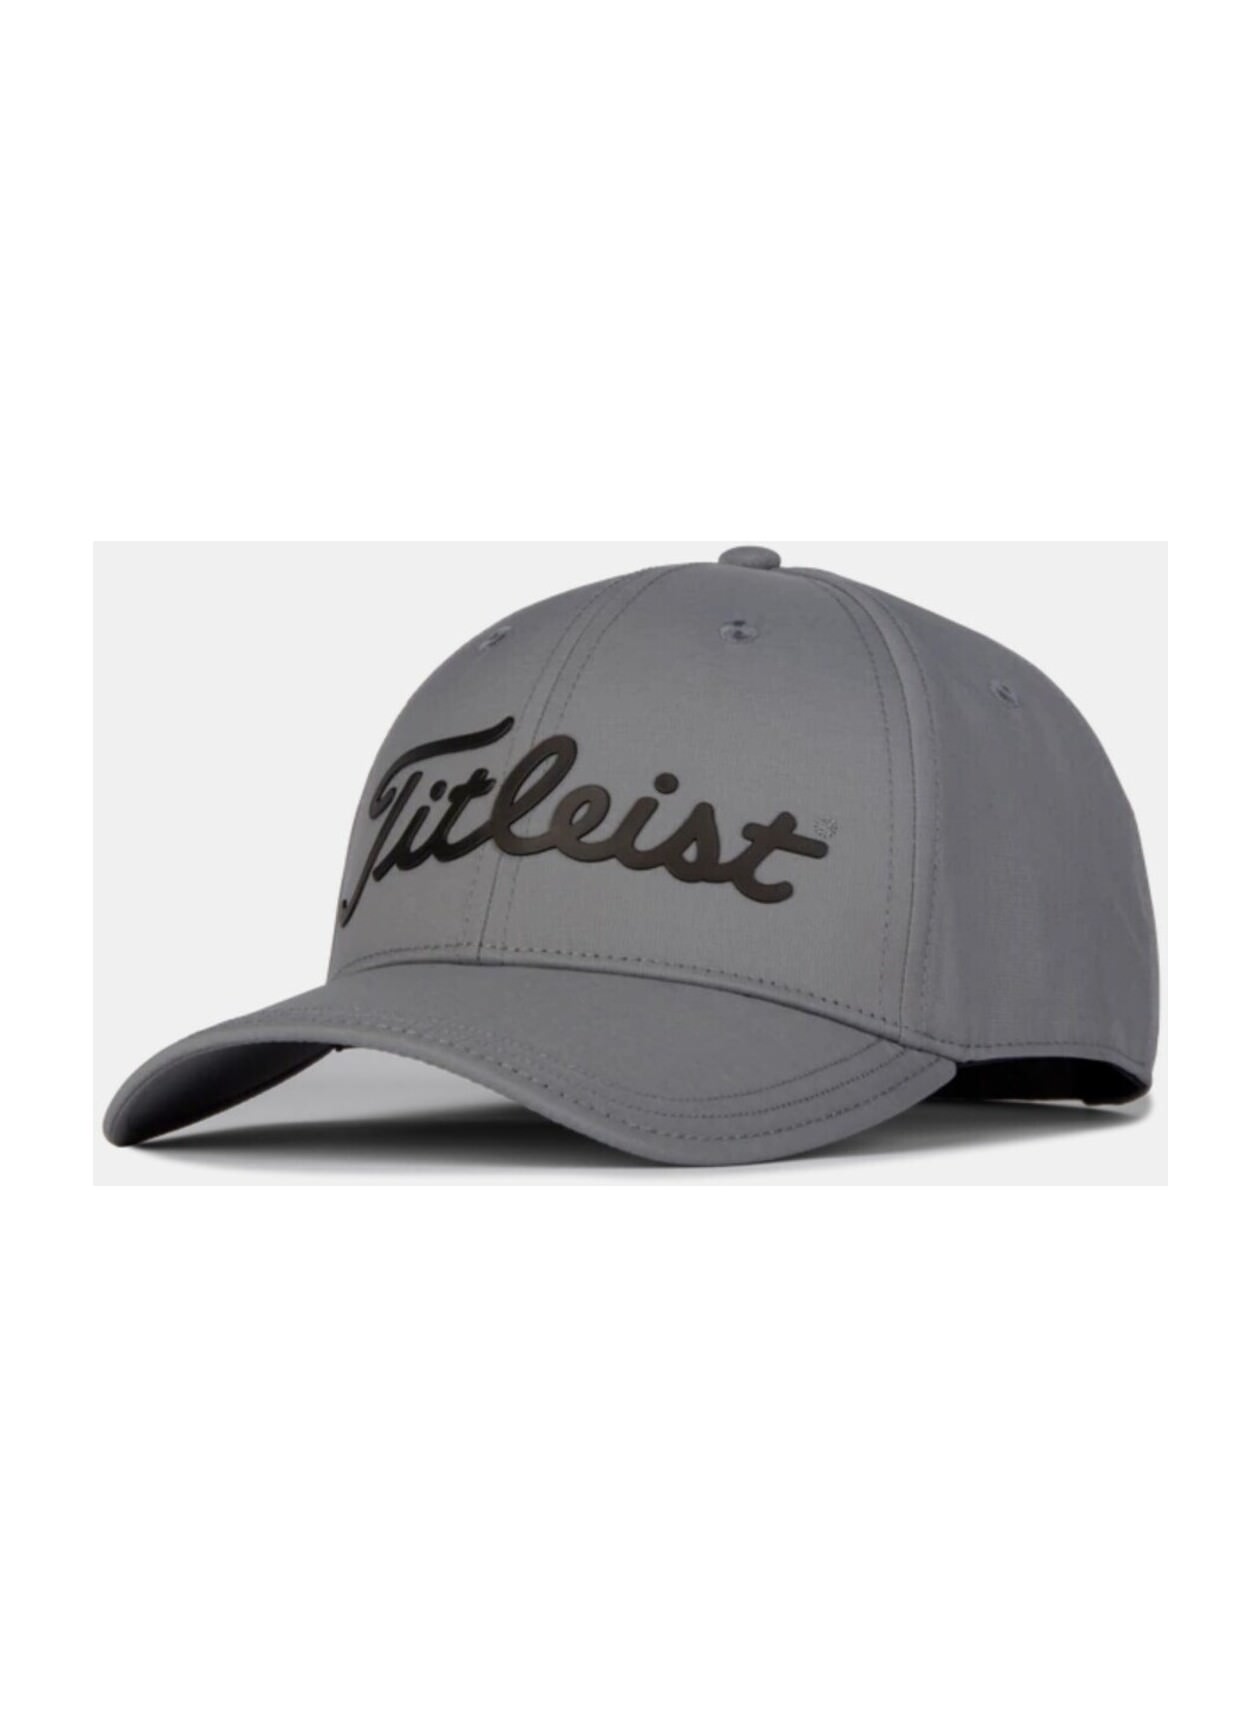 Titleist Charcoal / Black Players Performance Ball Marker Golf Hat